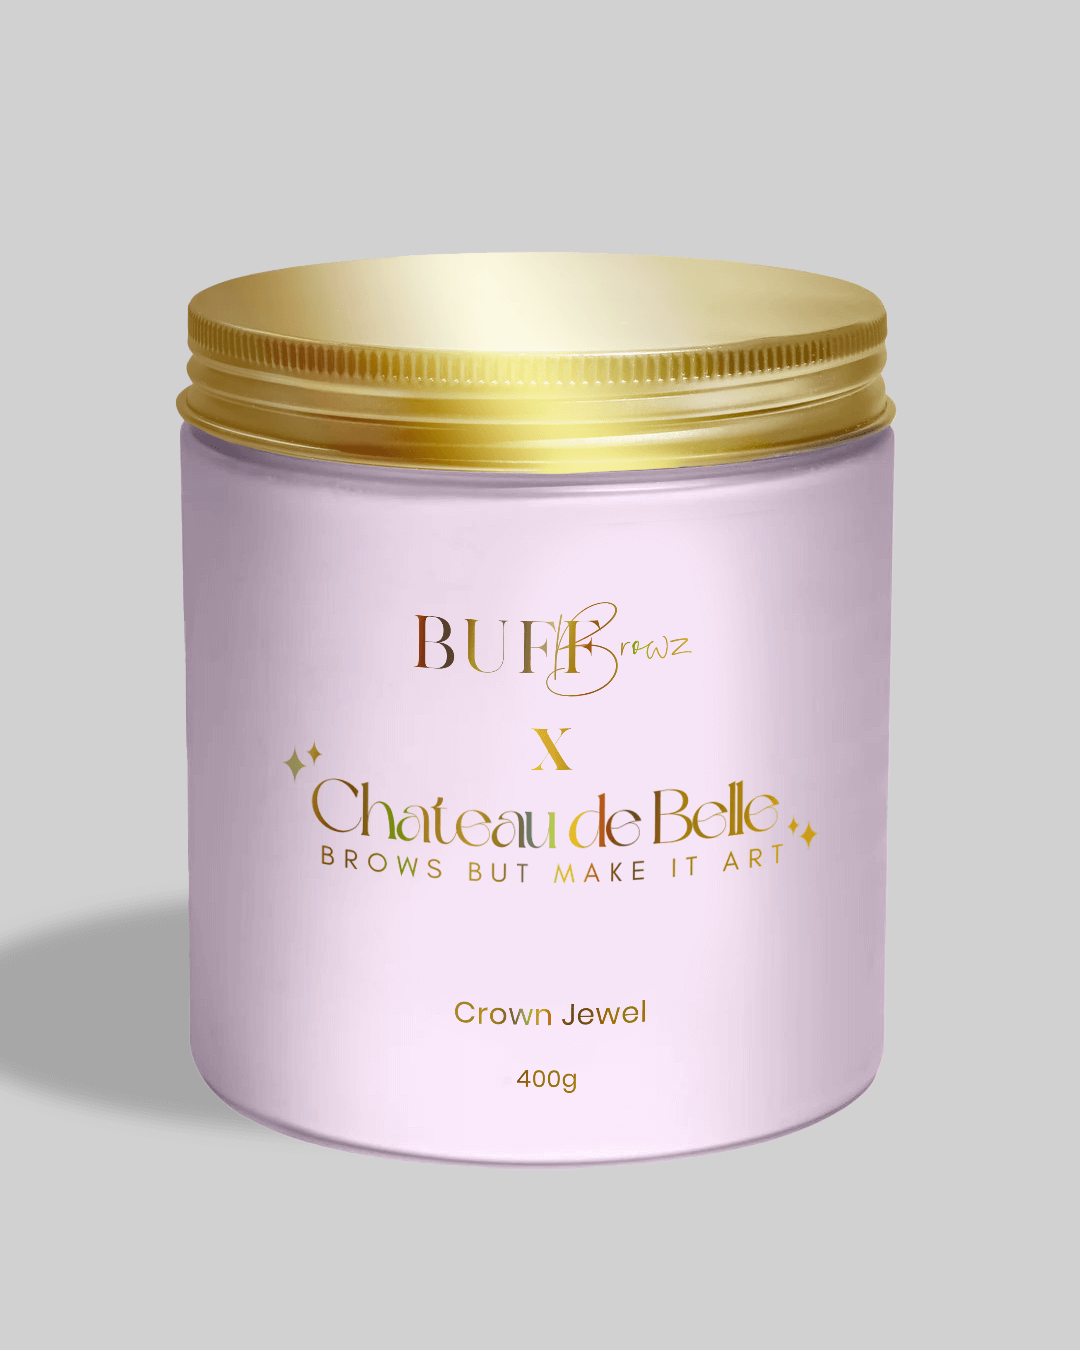 BUFF BROWZ X CHÂTEAU DE BELLE - "Brows But Make It Art" x Jelly Masks - Crown Jewel